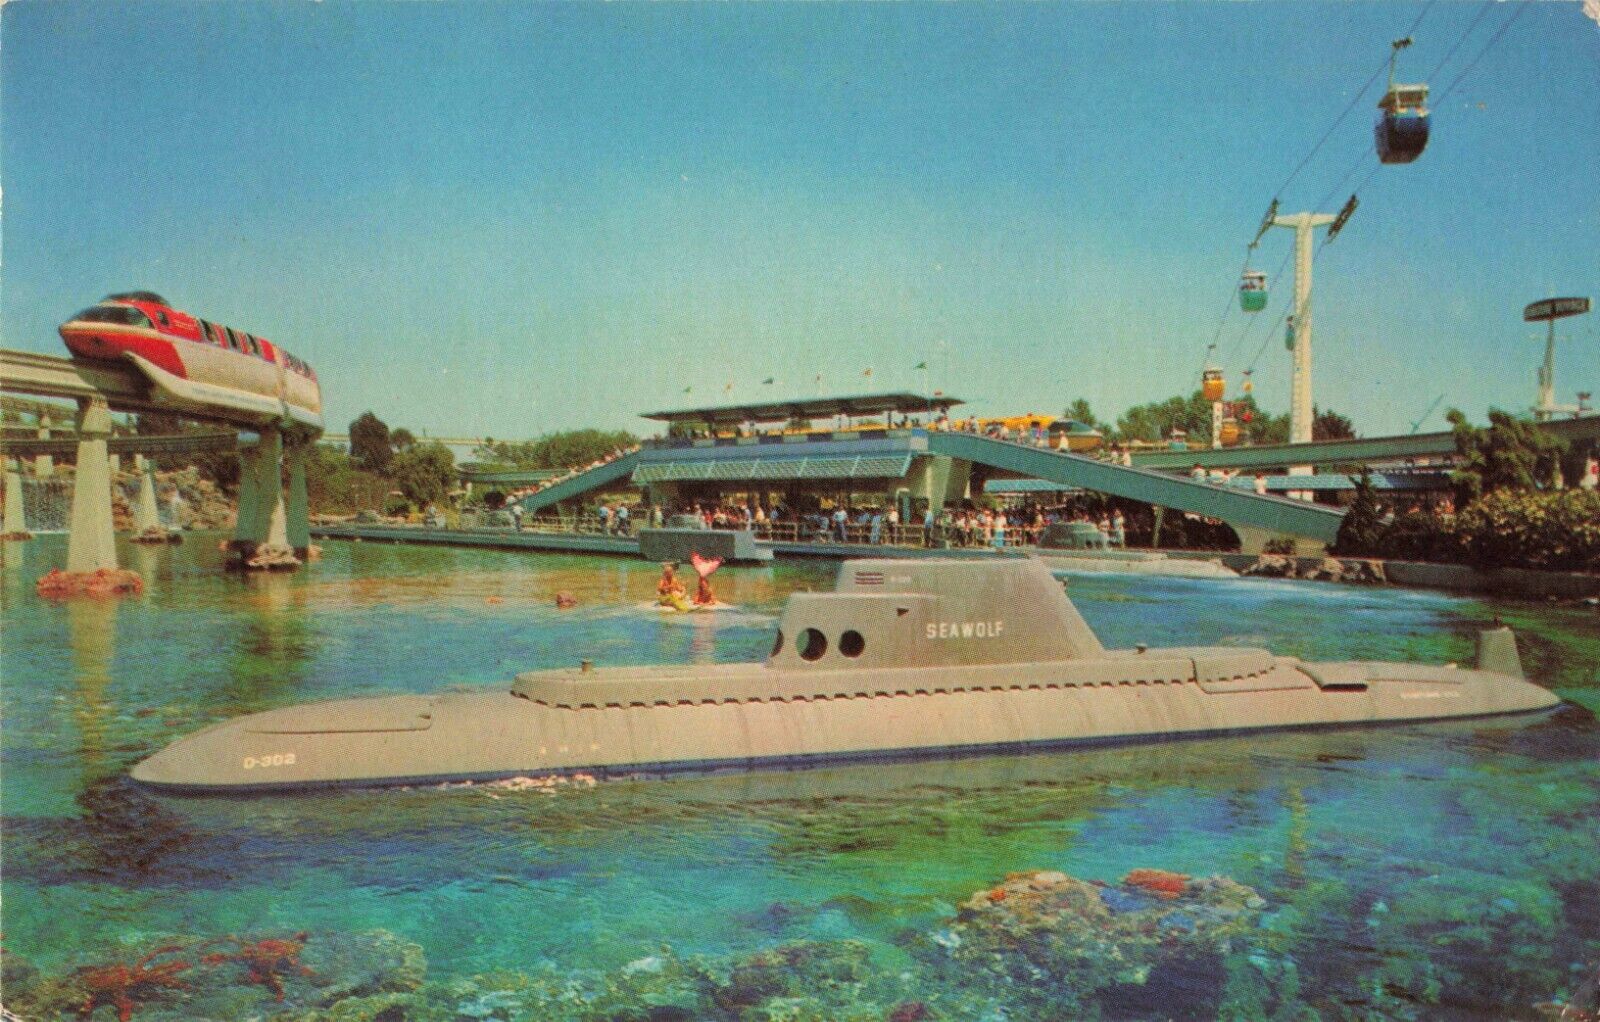 Submarine Ride Tomorrowland Disneyland Anaheim California CA 1965 Postcard